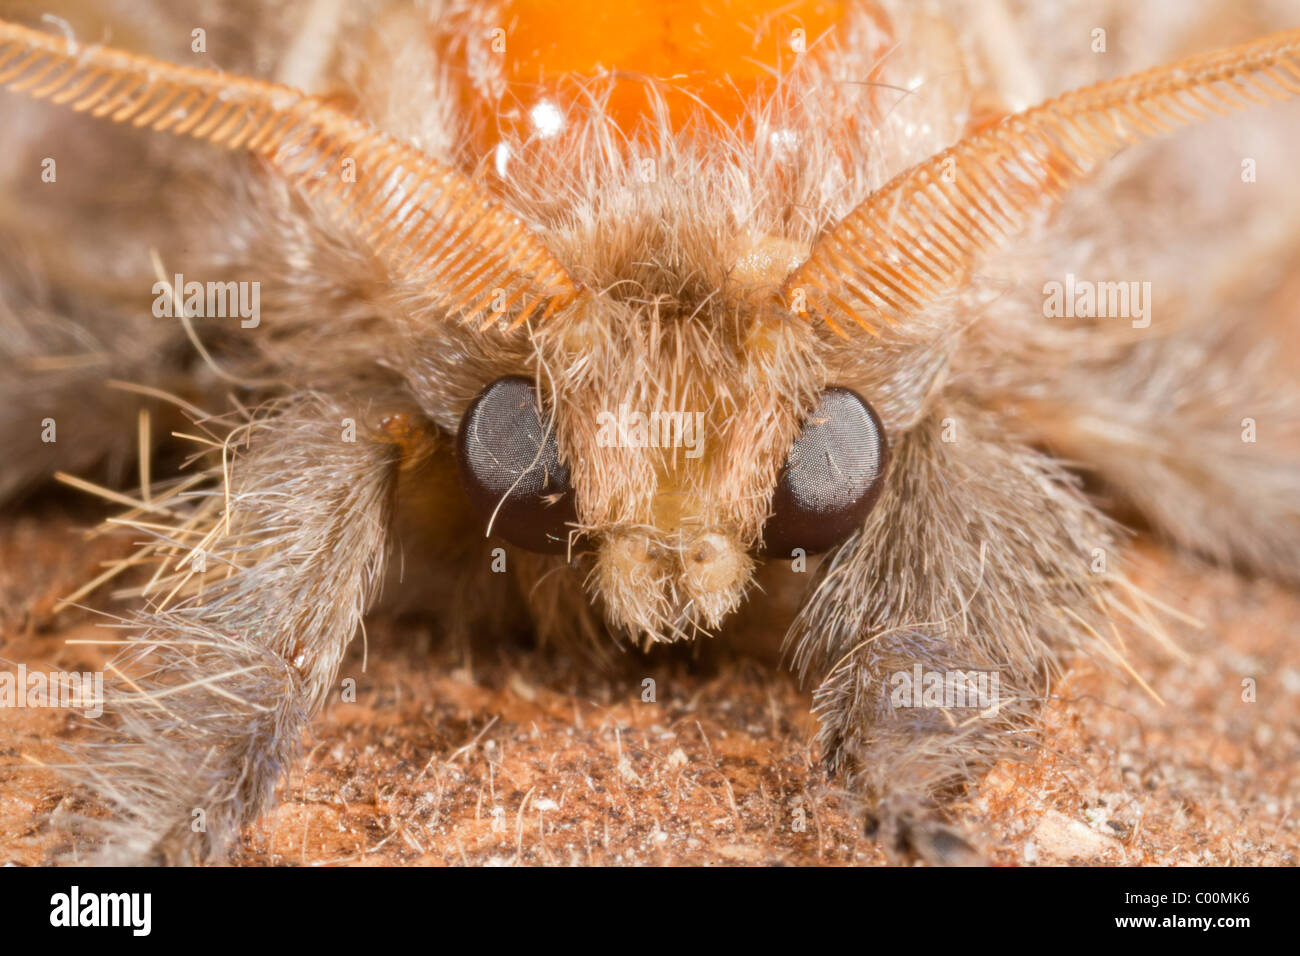 Amazonian moth, close-up of face Stock Photo